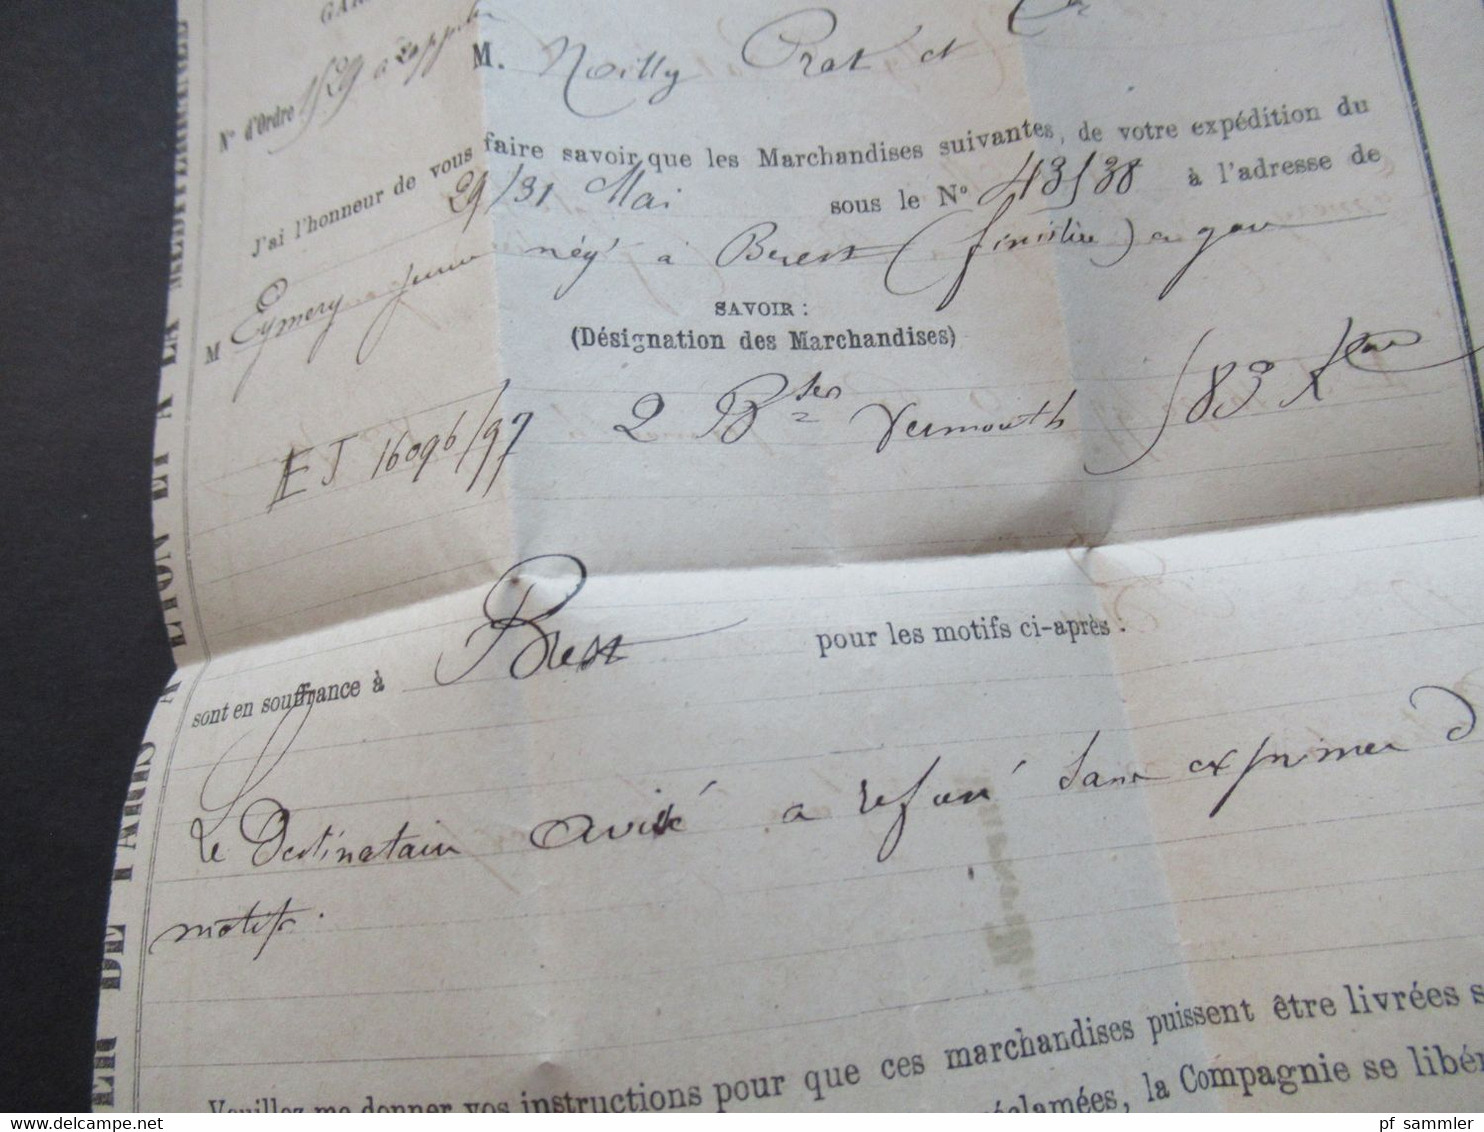 1867 Napoleon III. Nr.20 EF auf gedrucktem Brief Marseille Le Chef de Gare / Cehmins de Fer de Paris blauer L1 Marseile